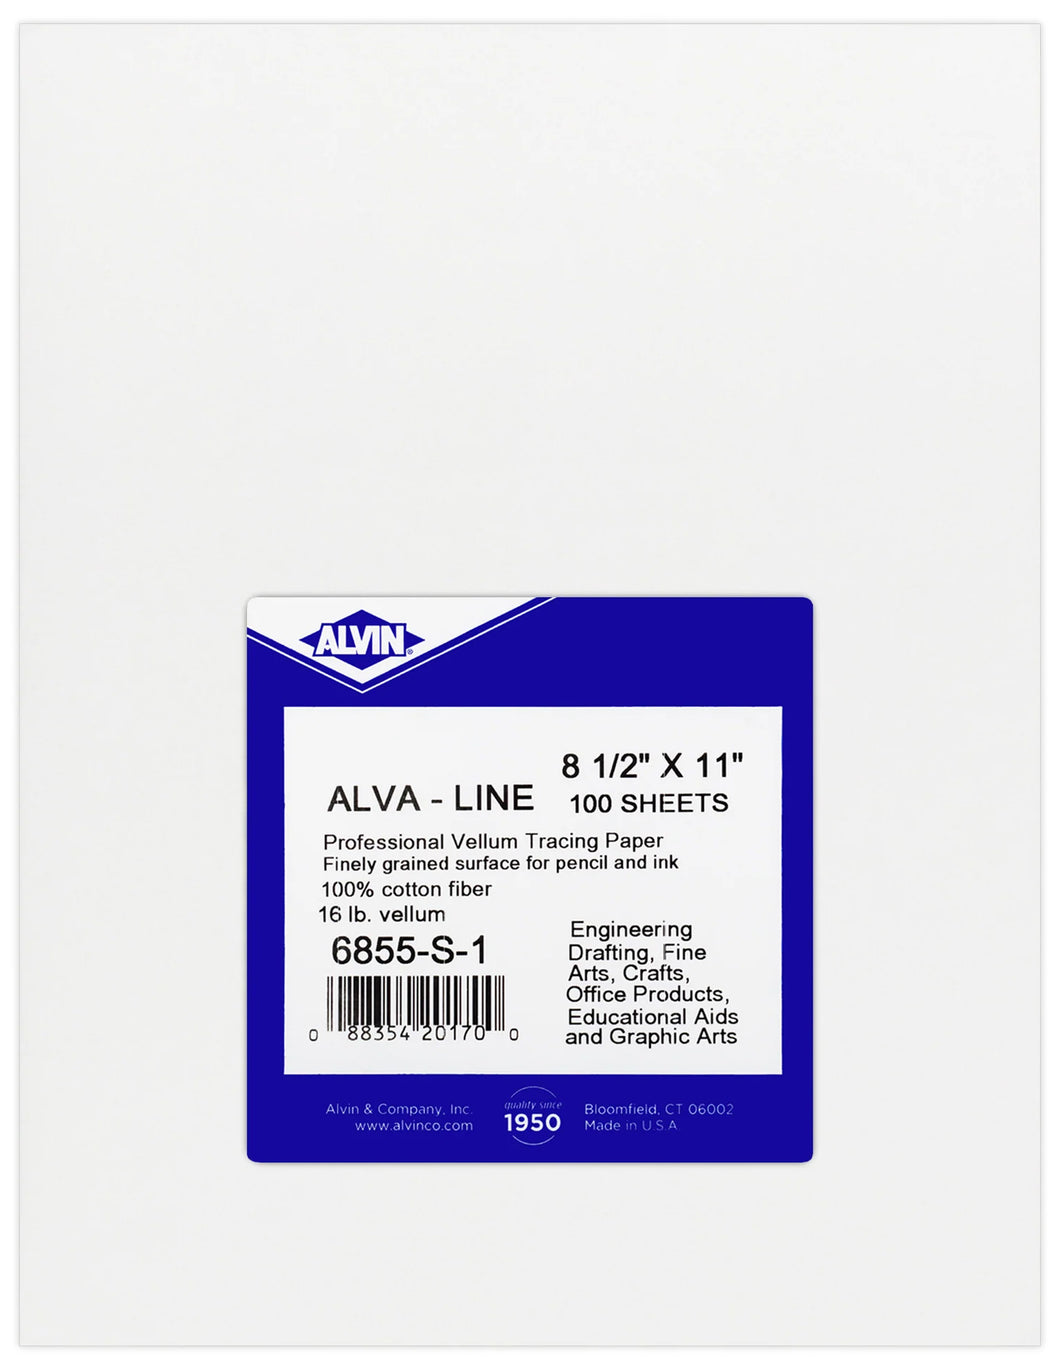 ALVIN Alva-Line 100 Sheet Pack Plain Tracing Paper, 8.5